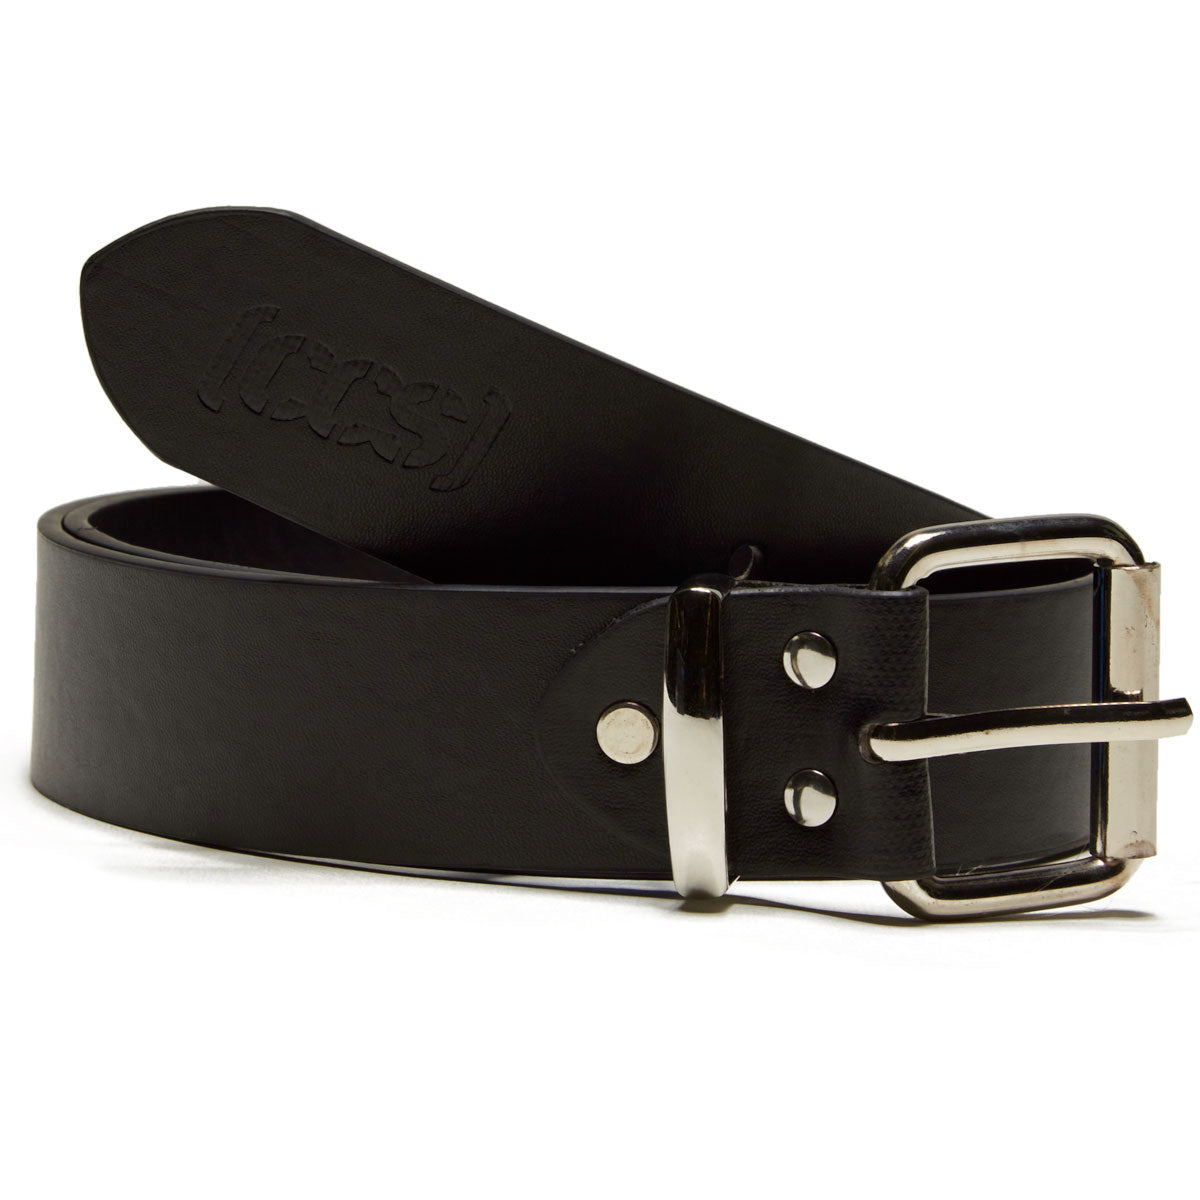 CCS Vegan Leather Belt - Black image 1